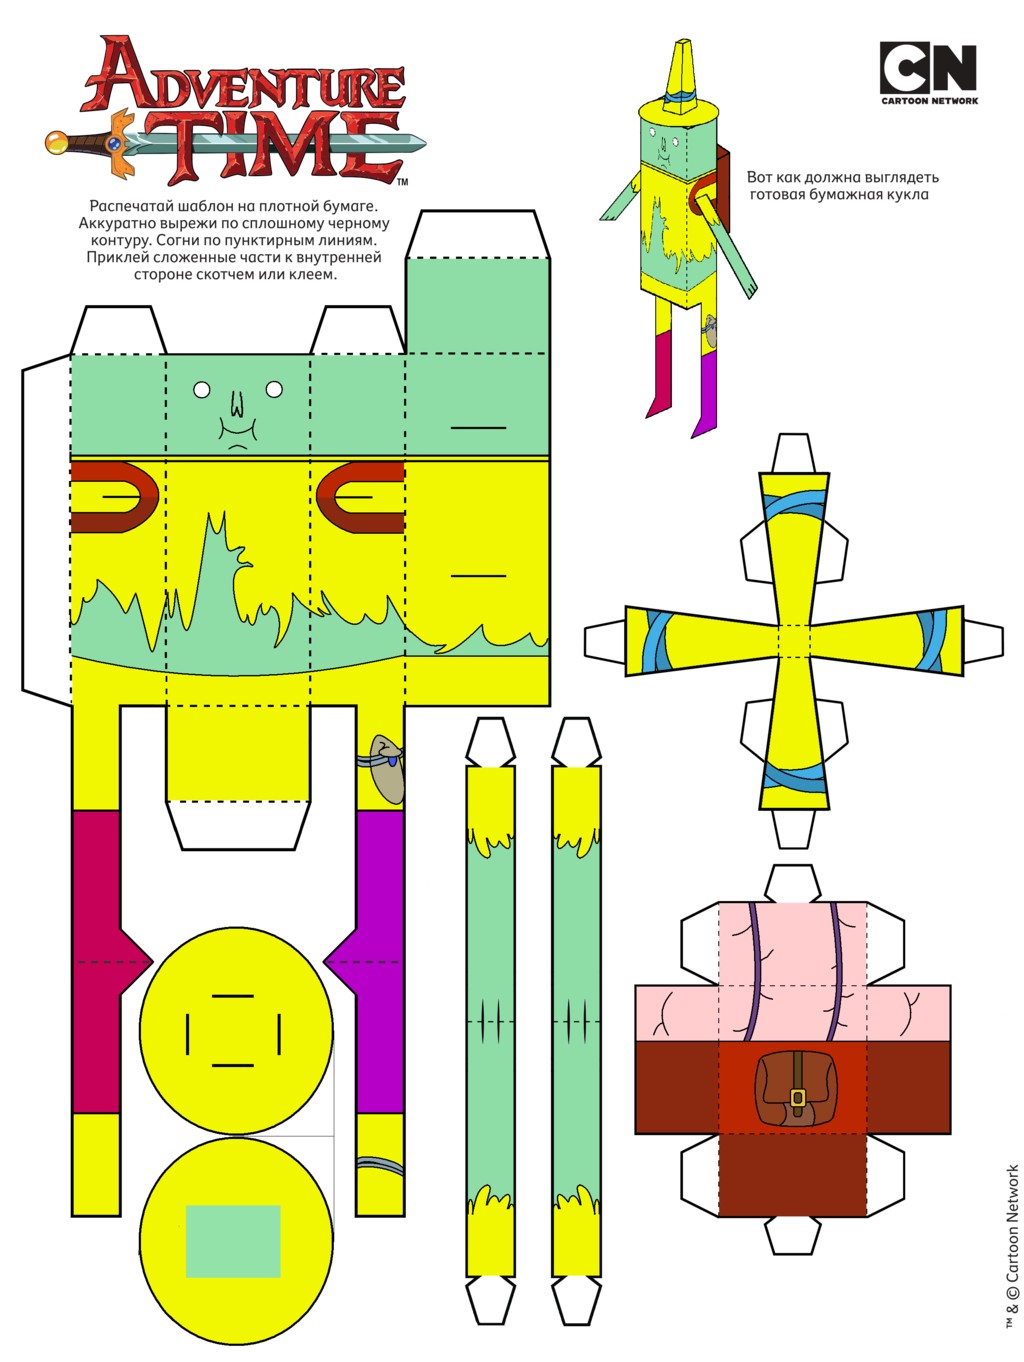 Adventure Time Papercraft Paper Adventure Time Adventure Time Papercraft Pinterest